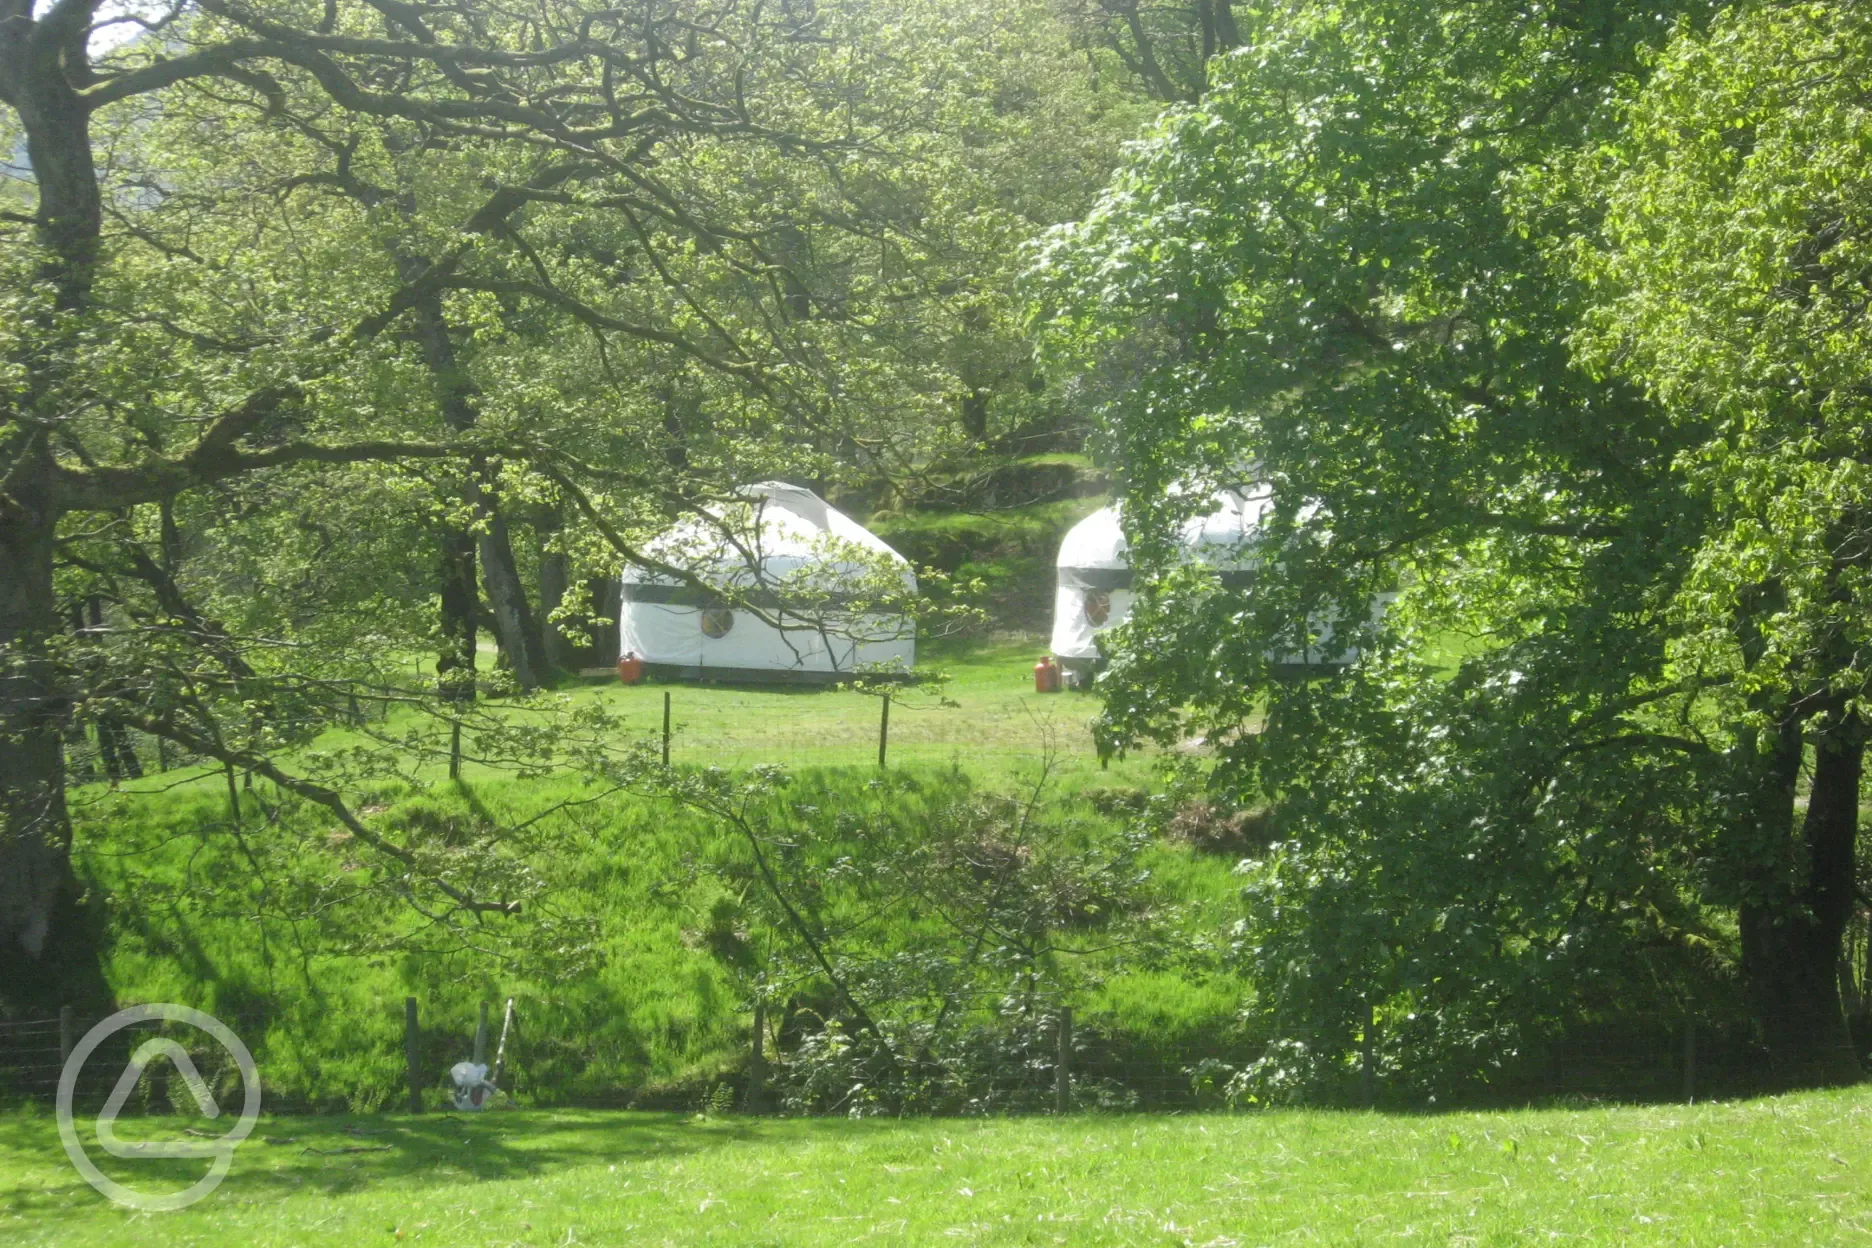 Yurt by the River Derwent